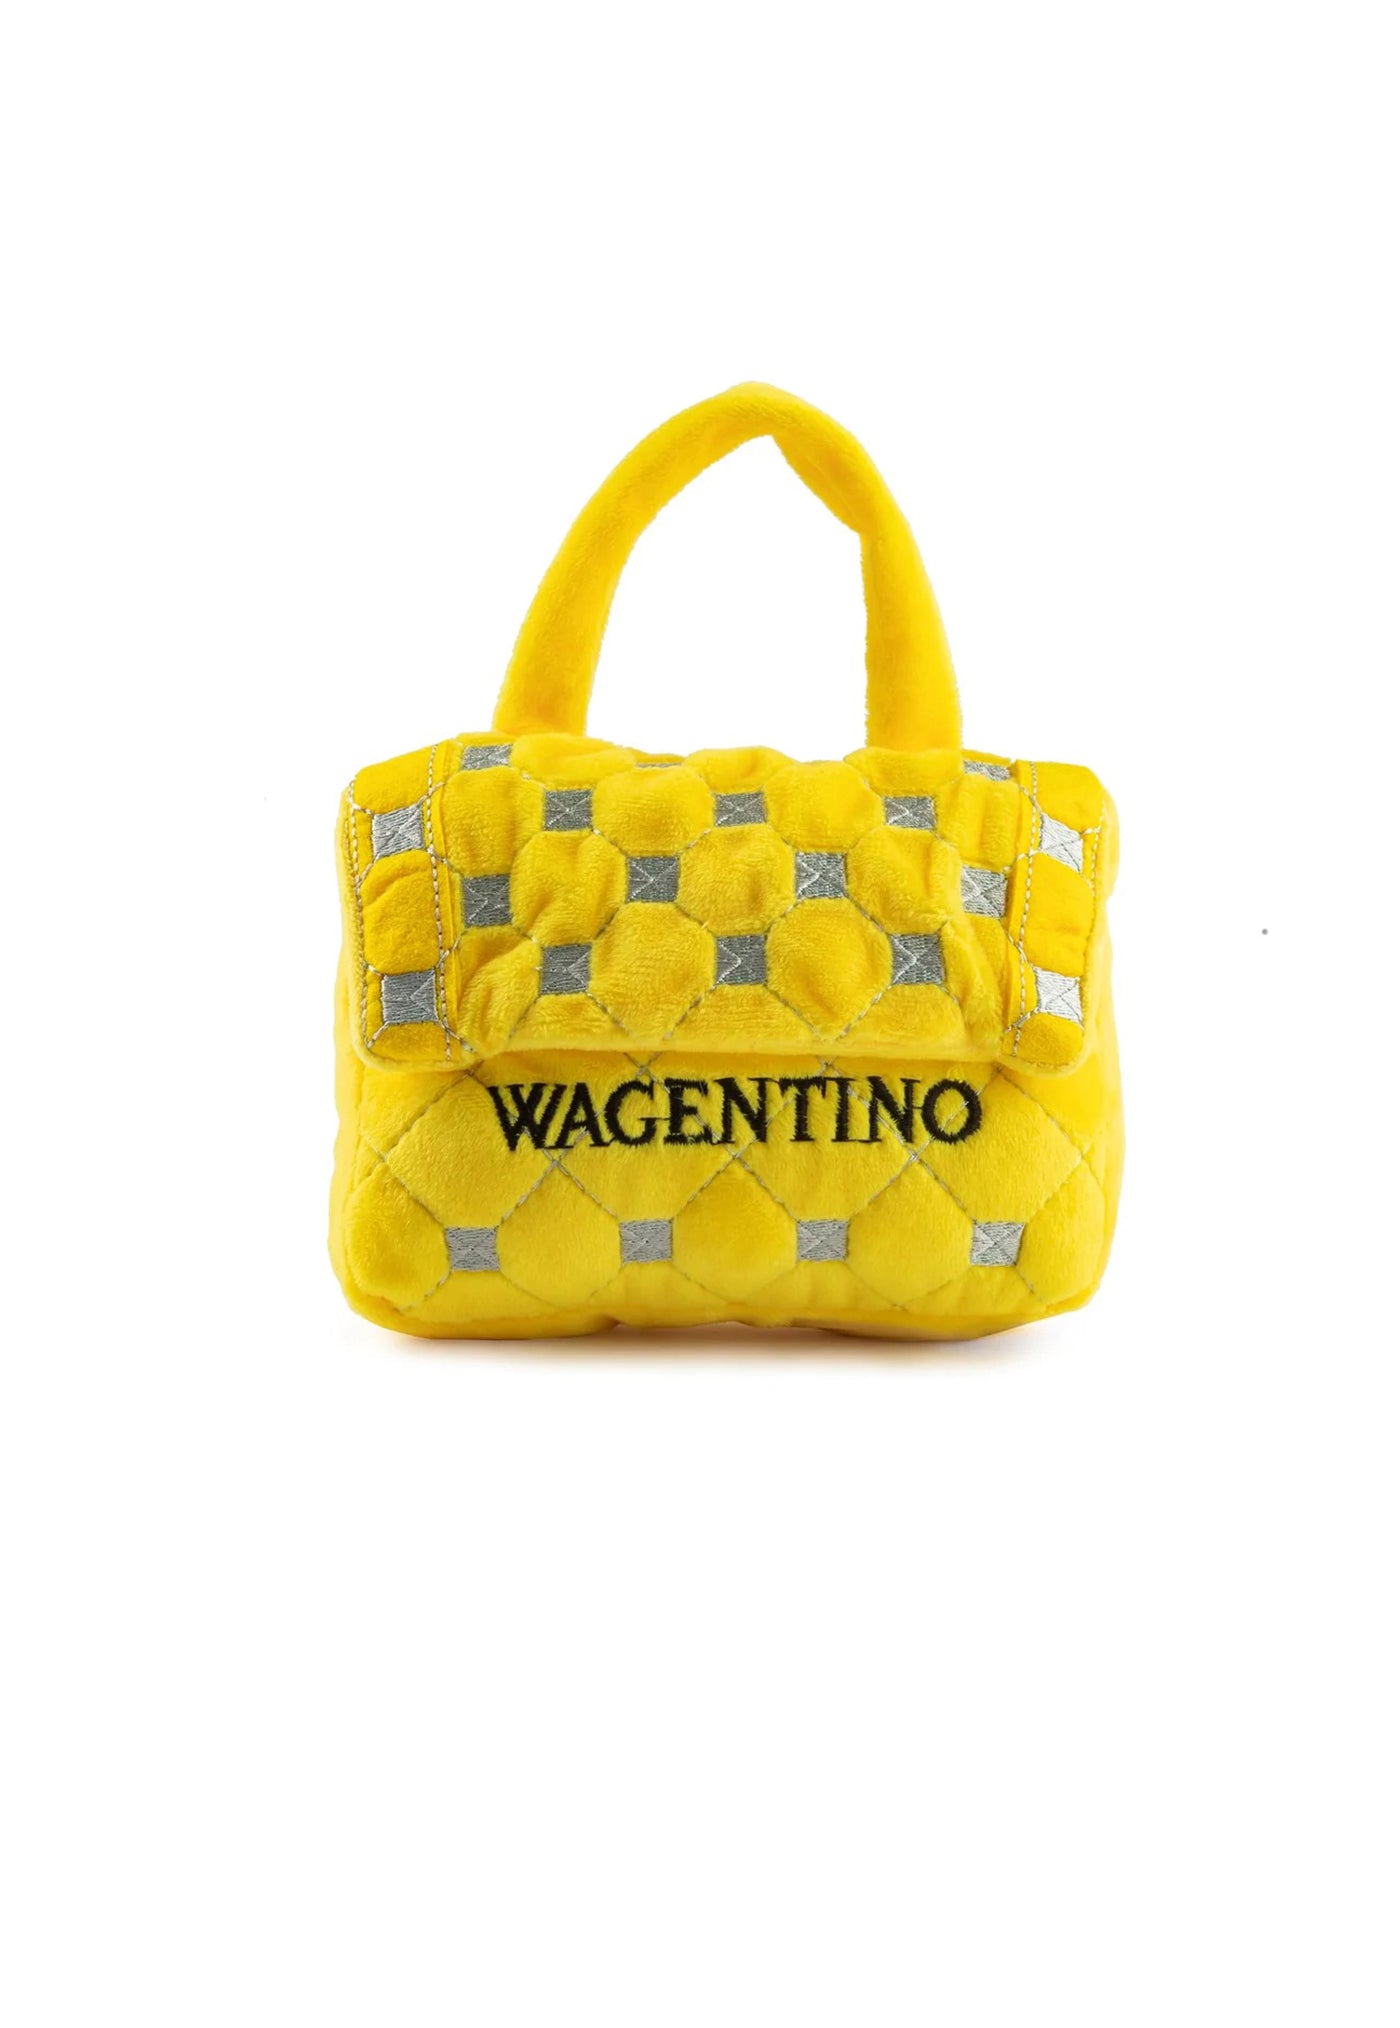 Wagentino Handbag sold by Angel Divine